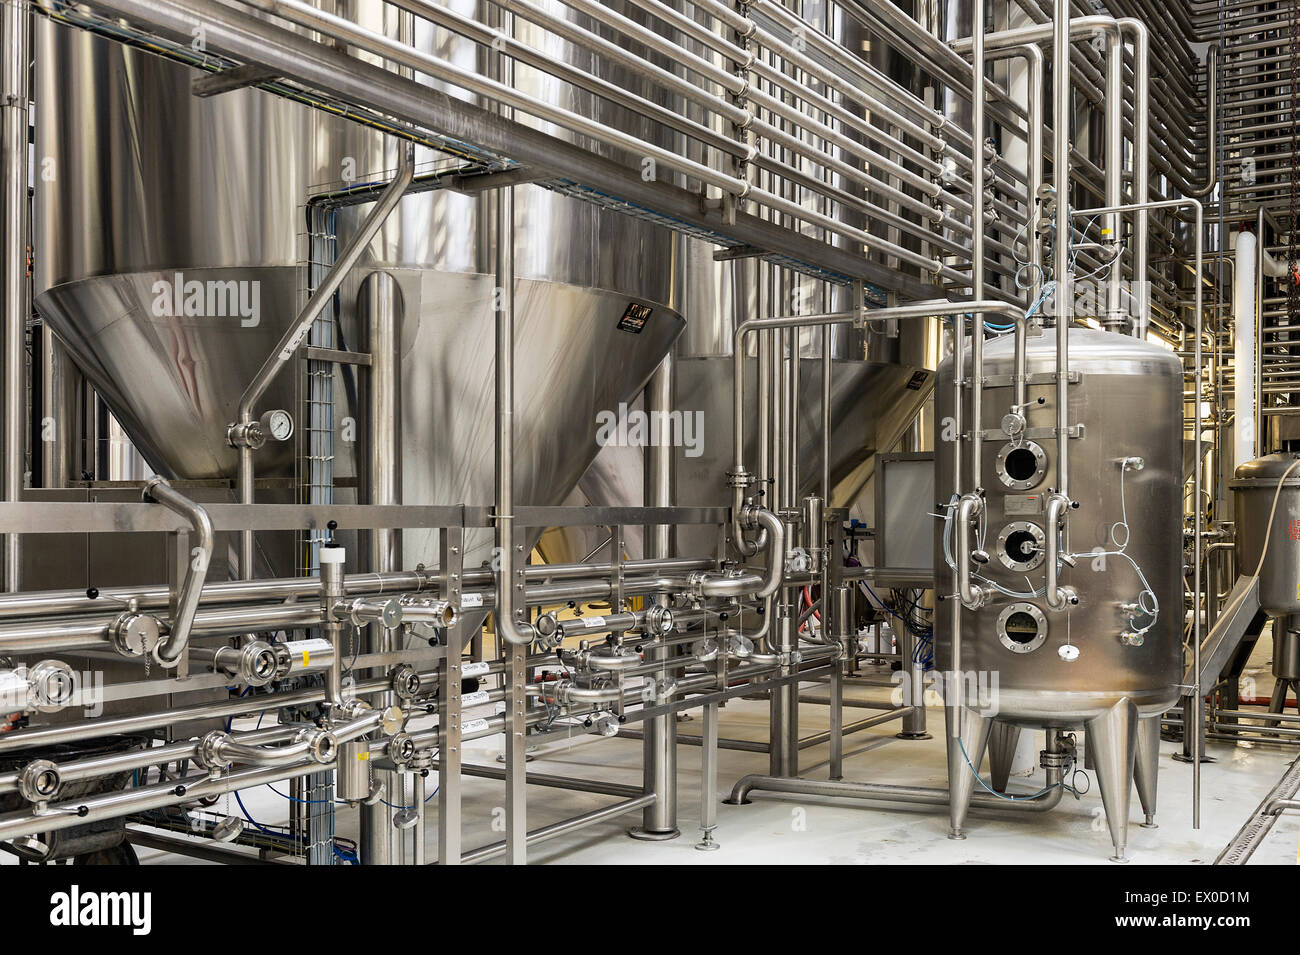 Brewery fermentation tanks. Stock Photo